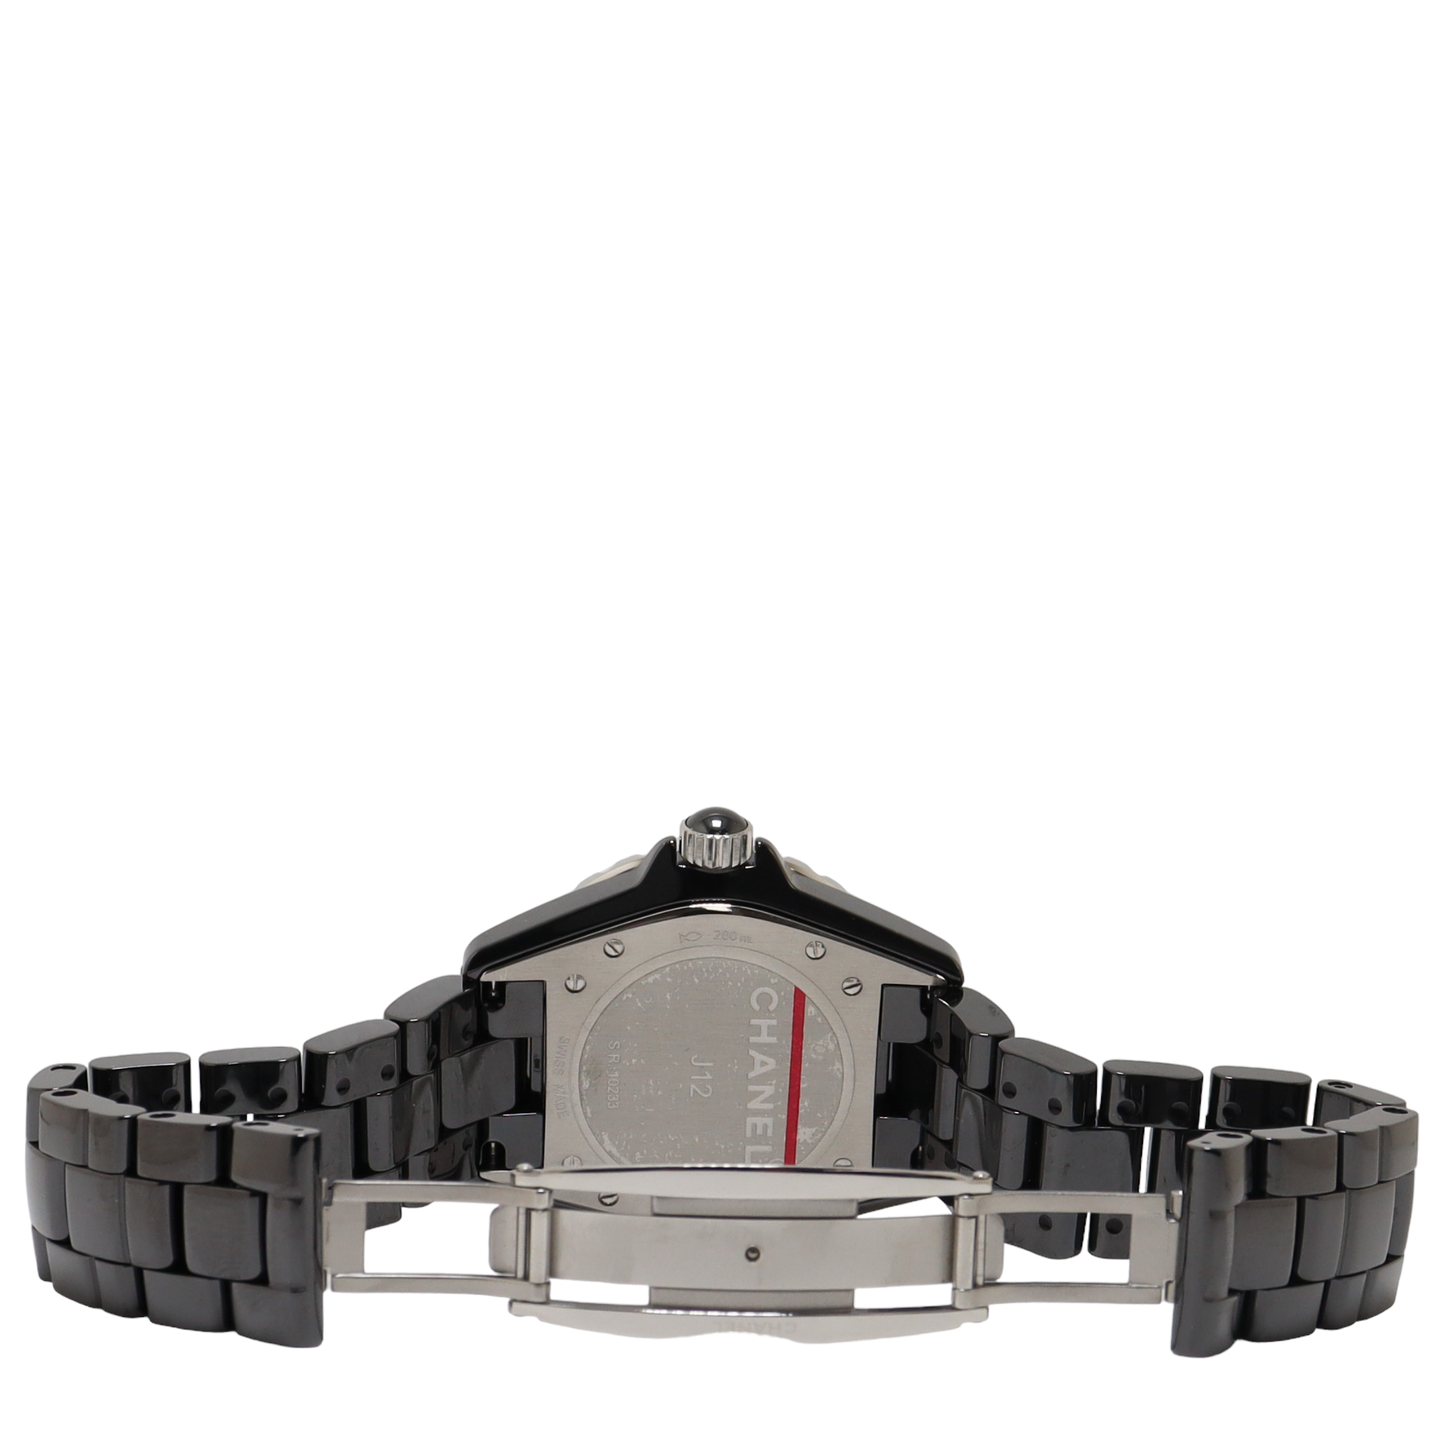 Chanel Black Ceramic Steel 33mm Black Arabic Dial Watch Reference#: H5695 - Happy Jewelers Fine Jewelry Lifetime Warranty